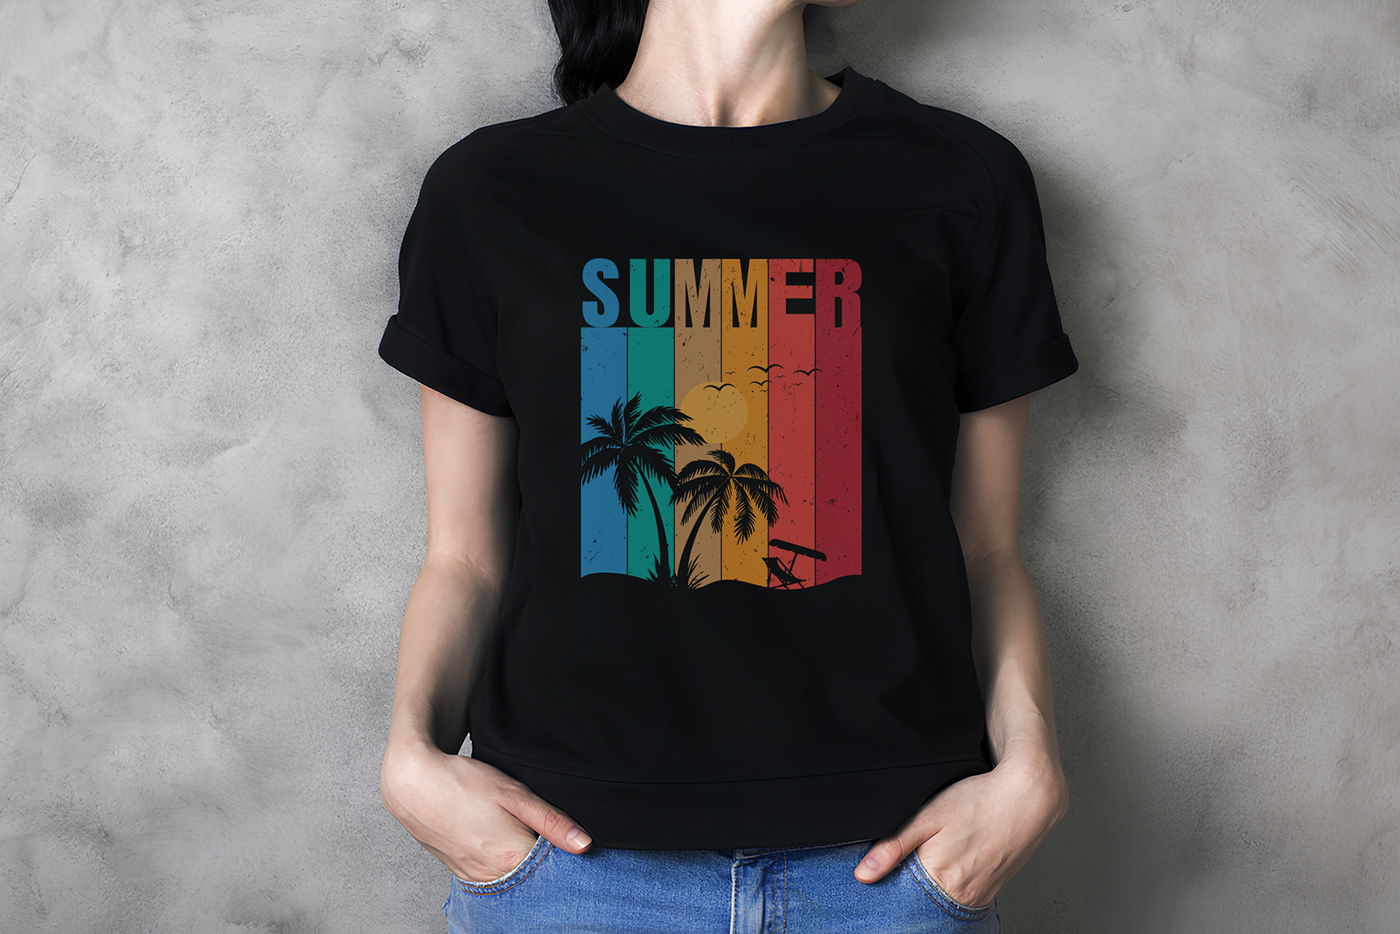 t-shirt Tshirt Design tshirts summer Summer T-shirt design summertime Nature Travel Clothing Aparel design